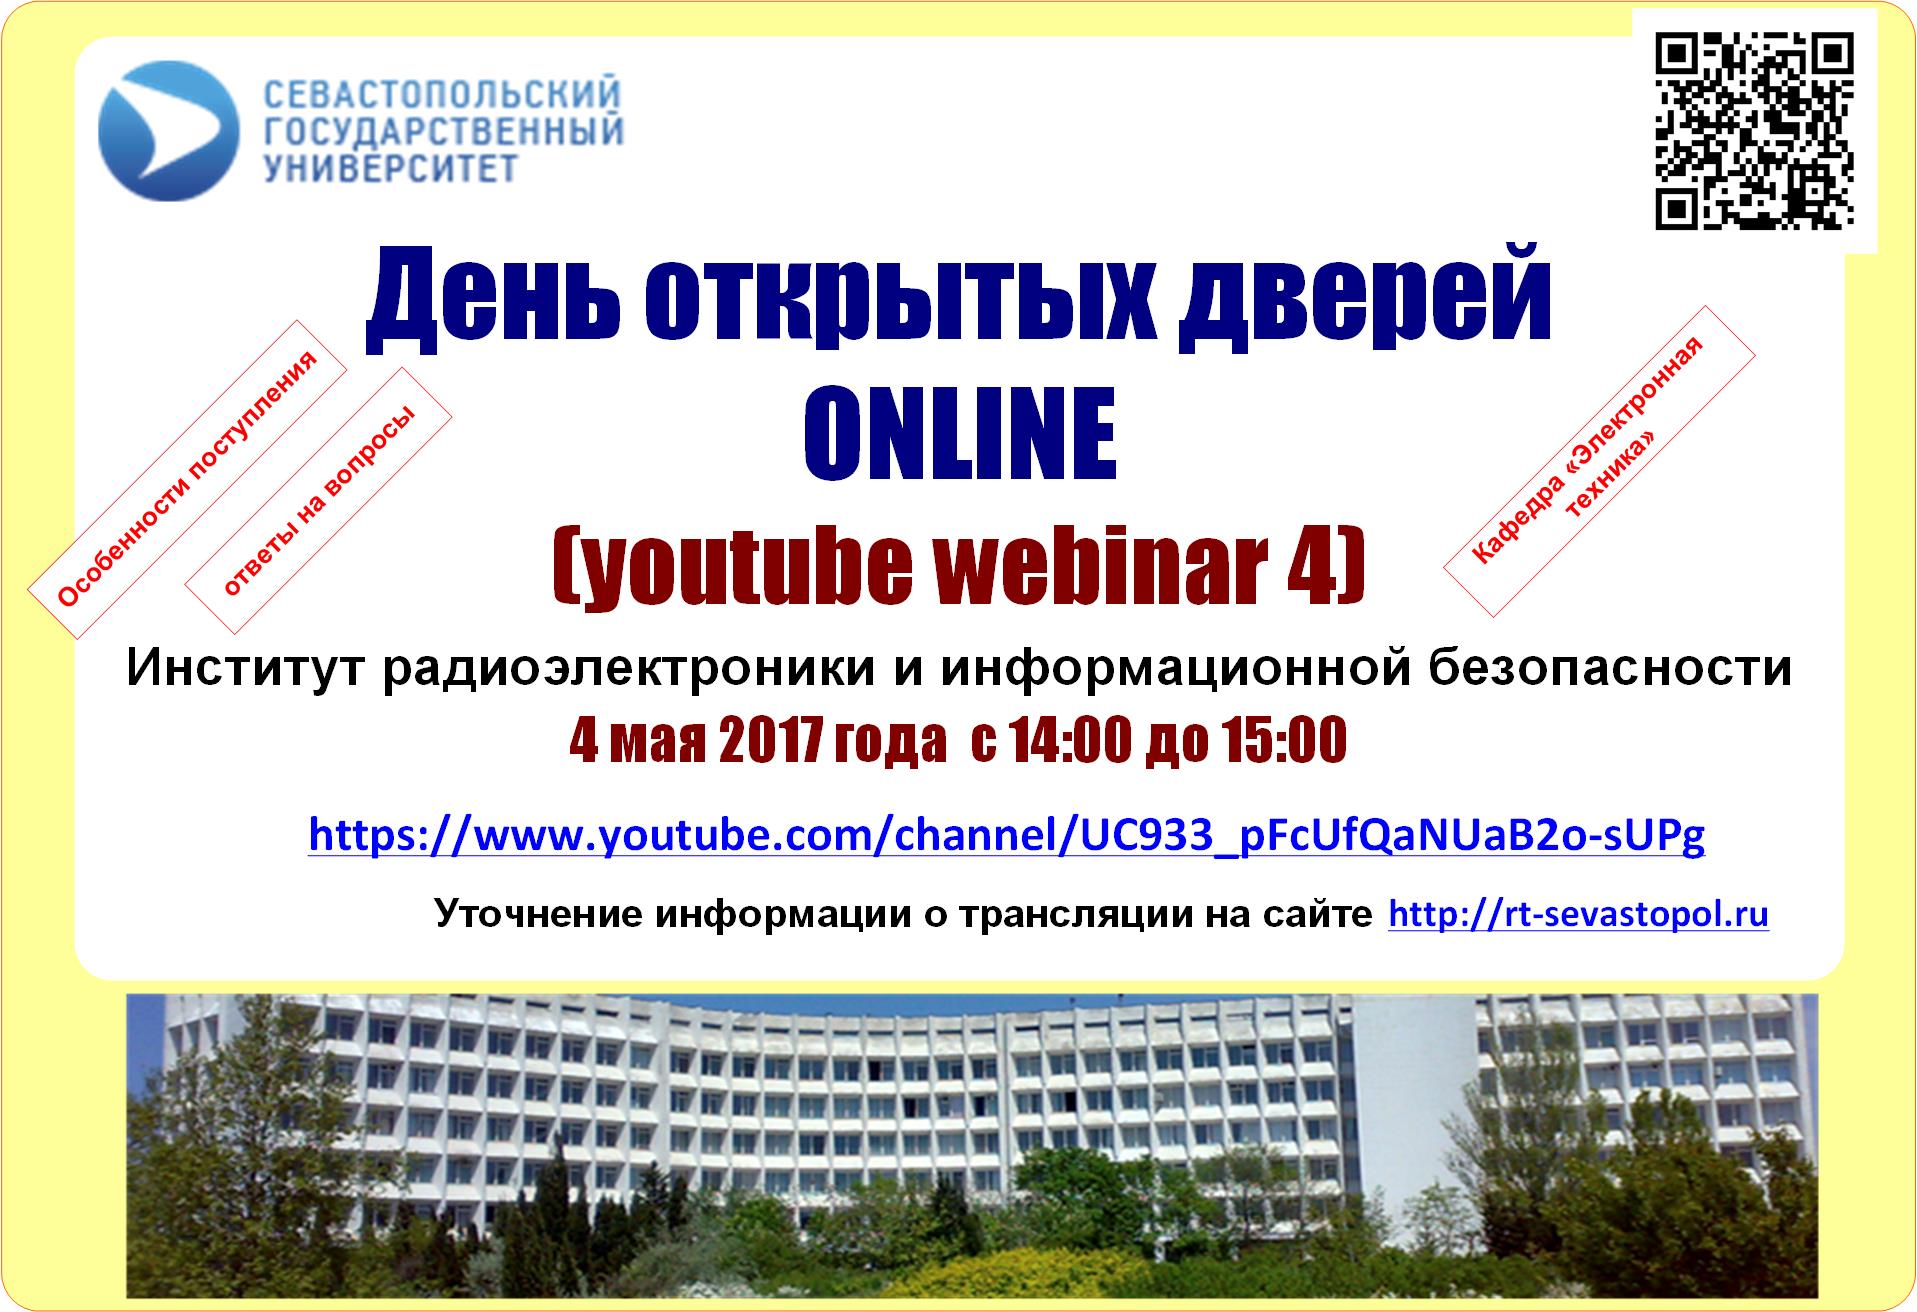 youtube webinar 4 Институт радиоэлектроники и информационной безопасности